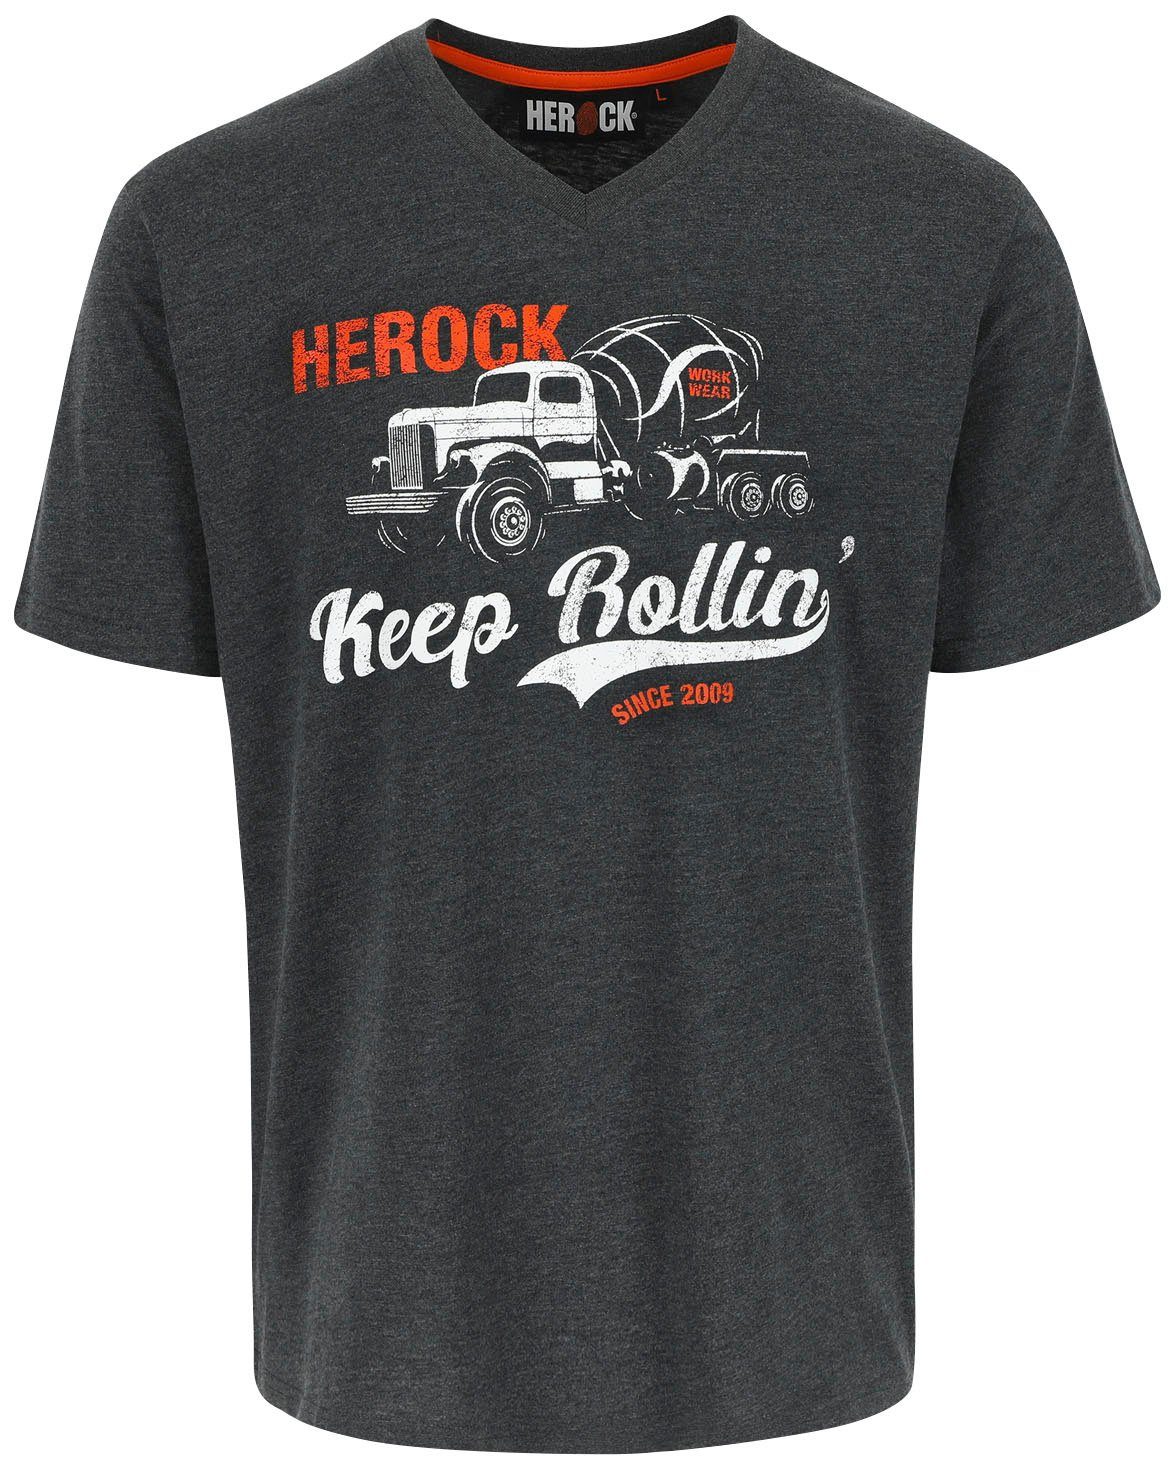 Limited Rollin T-Shirt Edition Herock